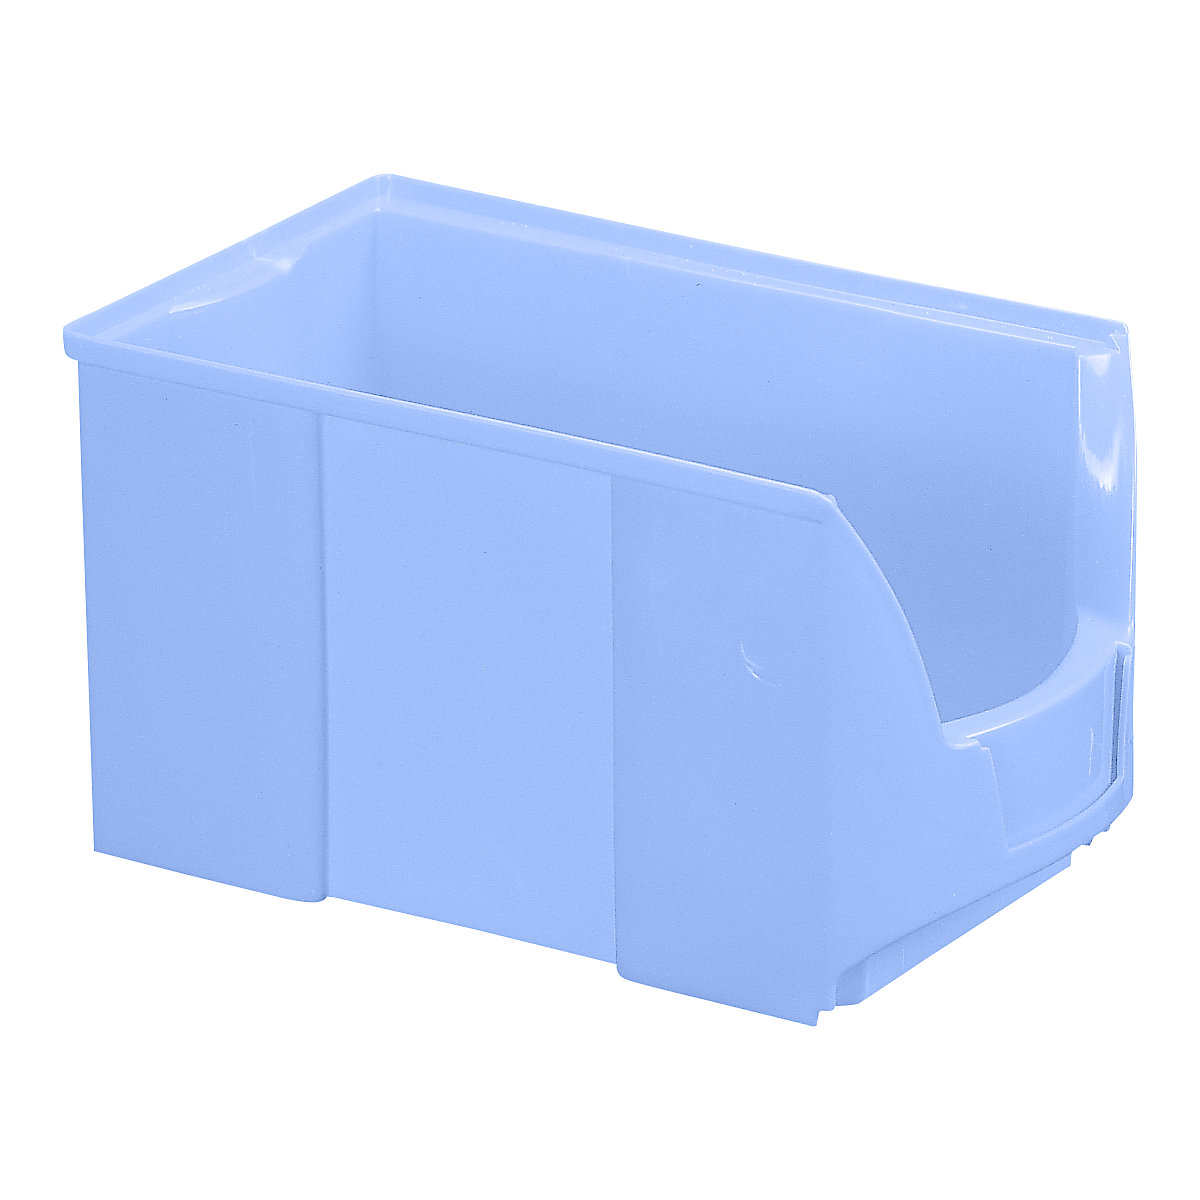 FUTURA-magazijnbak van polyethyleen, l x b x h = 360 x 208 x 201 mm, VE = 8 stuks, blauw